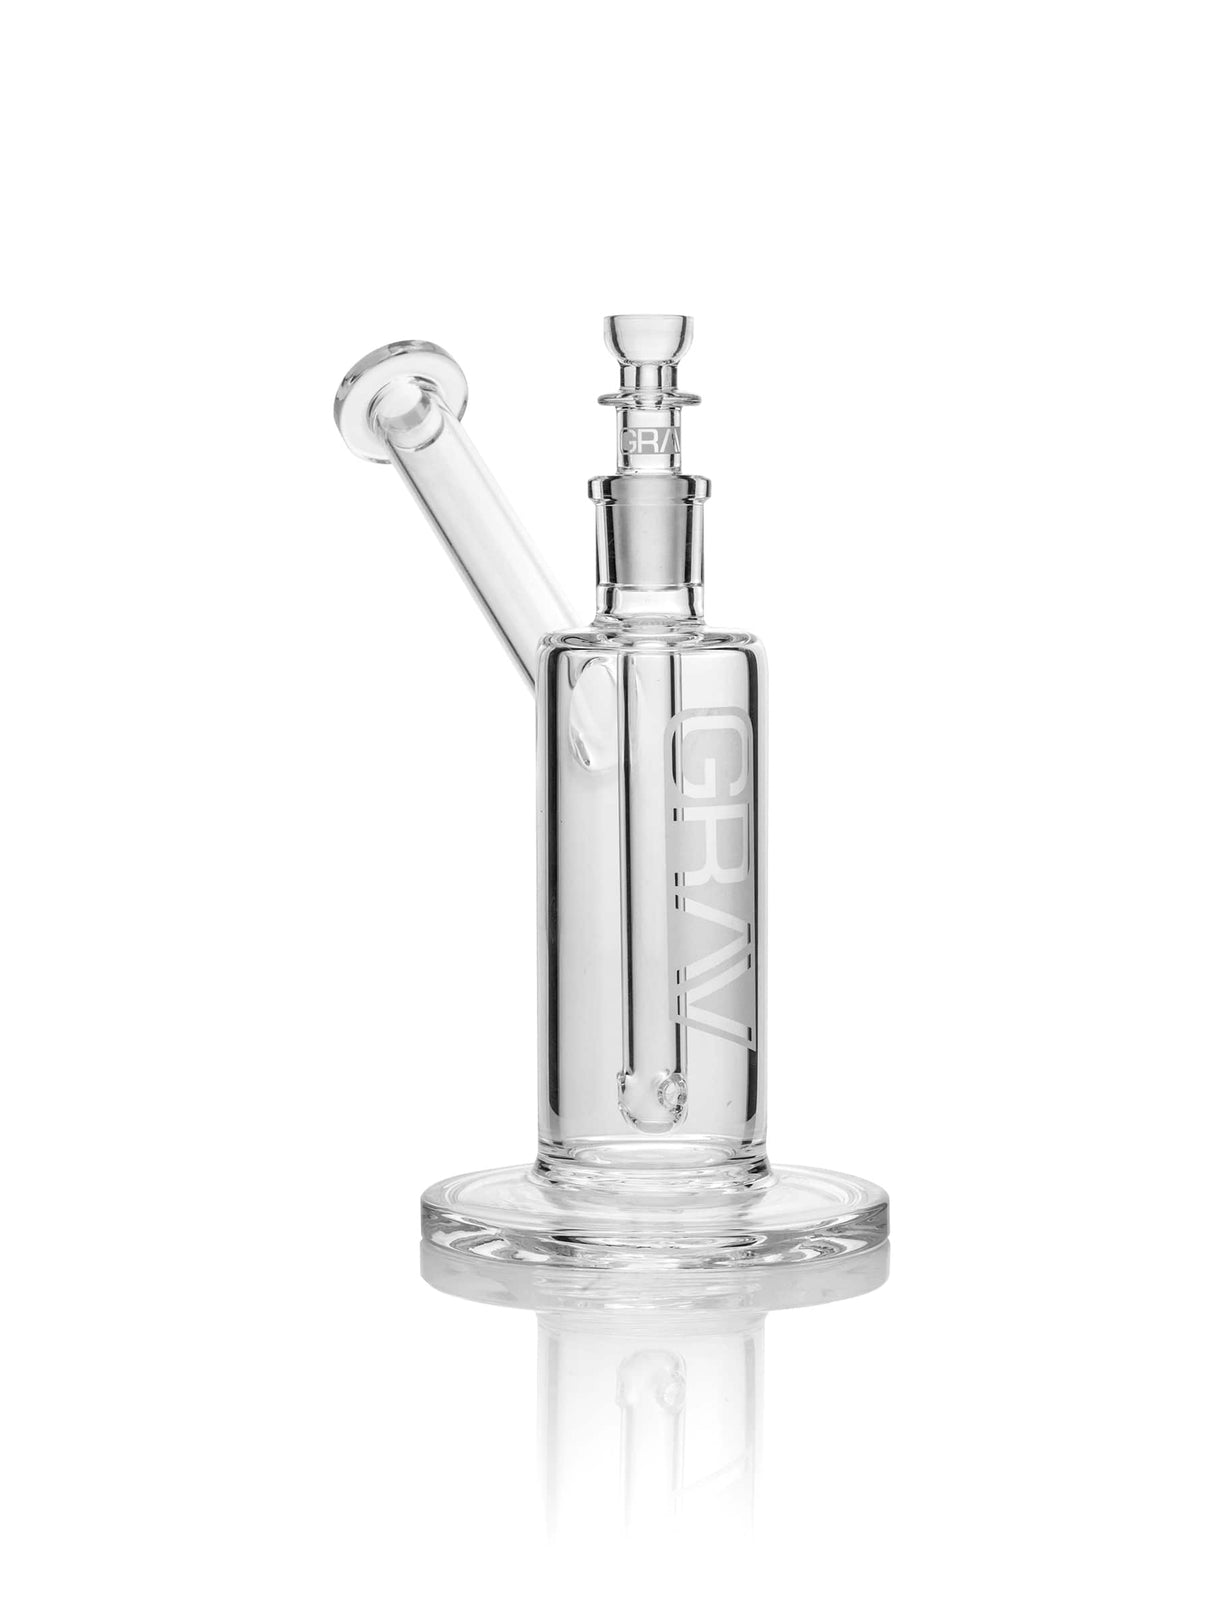 GRAV Medium Upright Bubbler in clear borosilicate glass with slit-diffuser percolator, front view